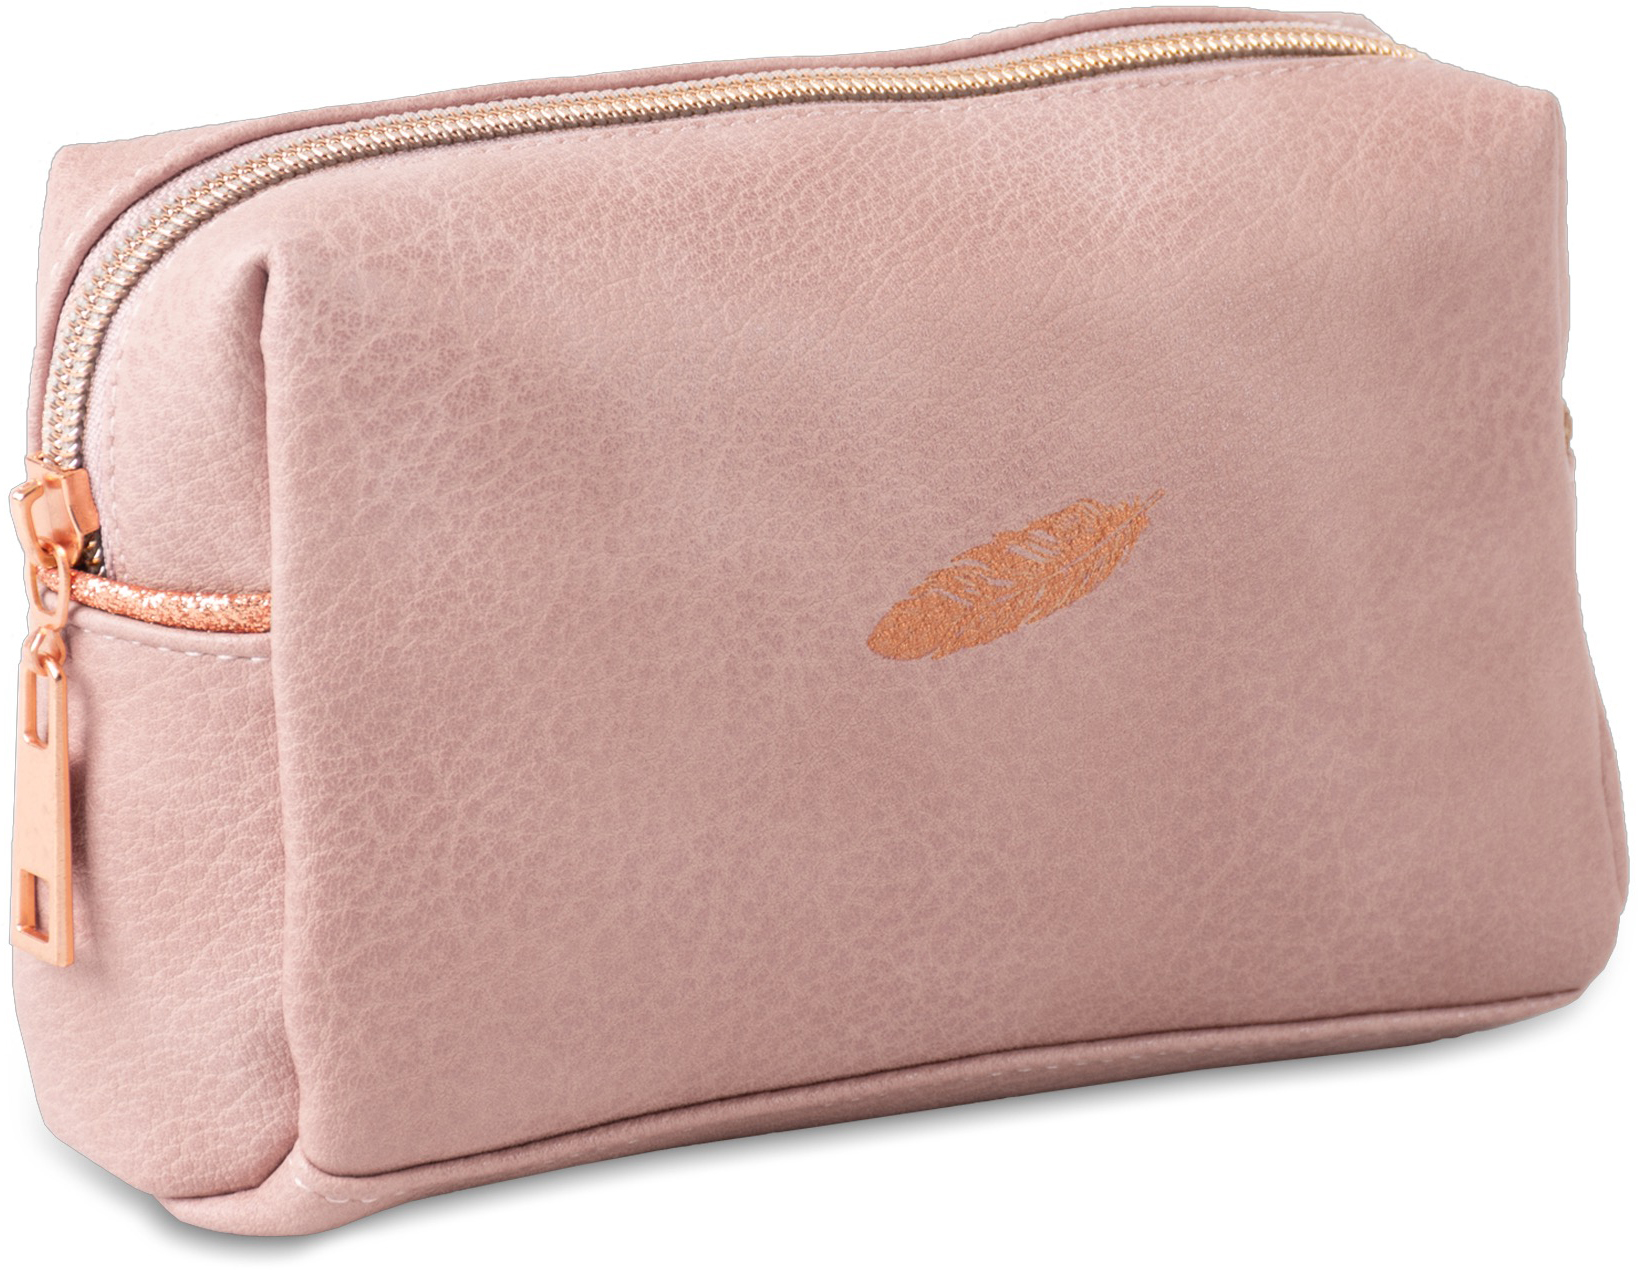 ROOST Cosmetics bag 16x6x10cm 500618 Midnight gold, soft pink